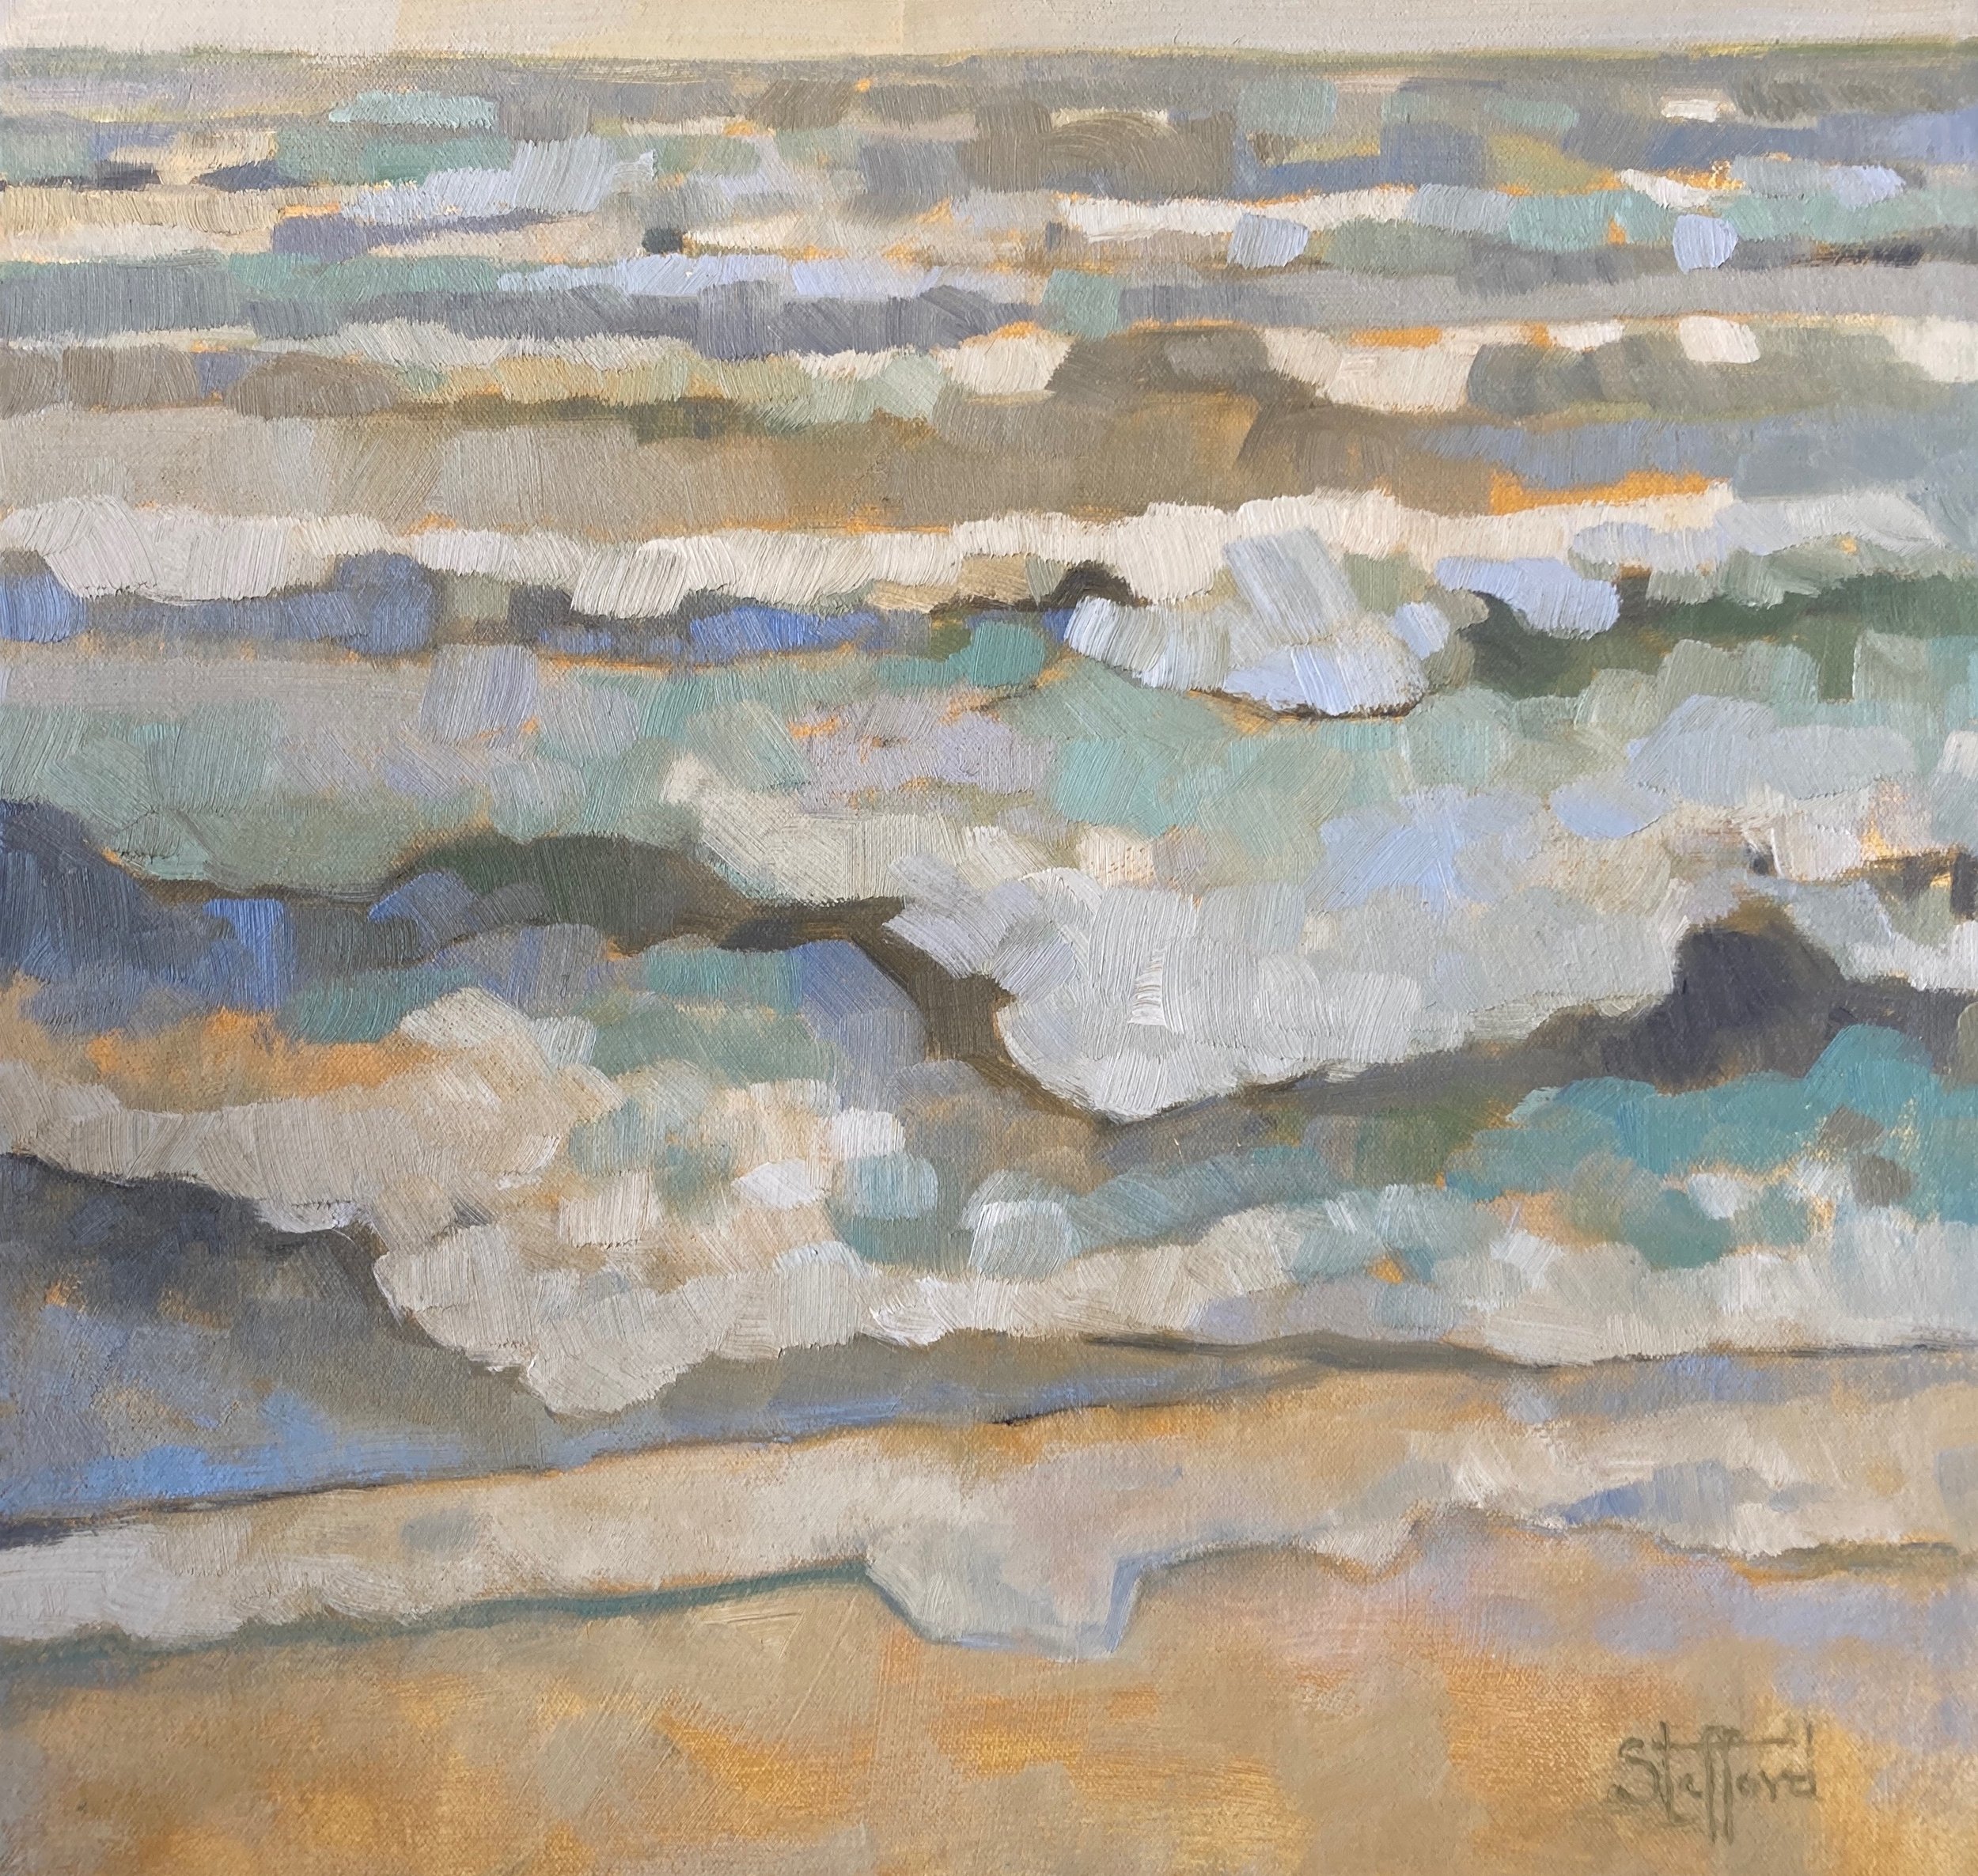 Lake Michigan Waves, 16"x16, oil on canvas